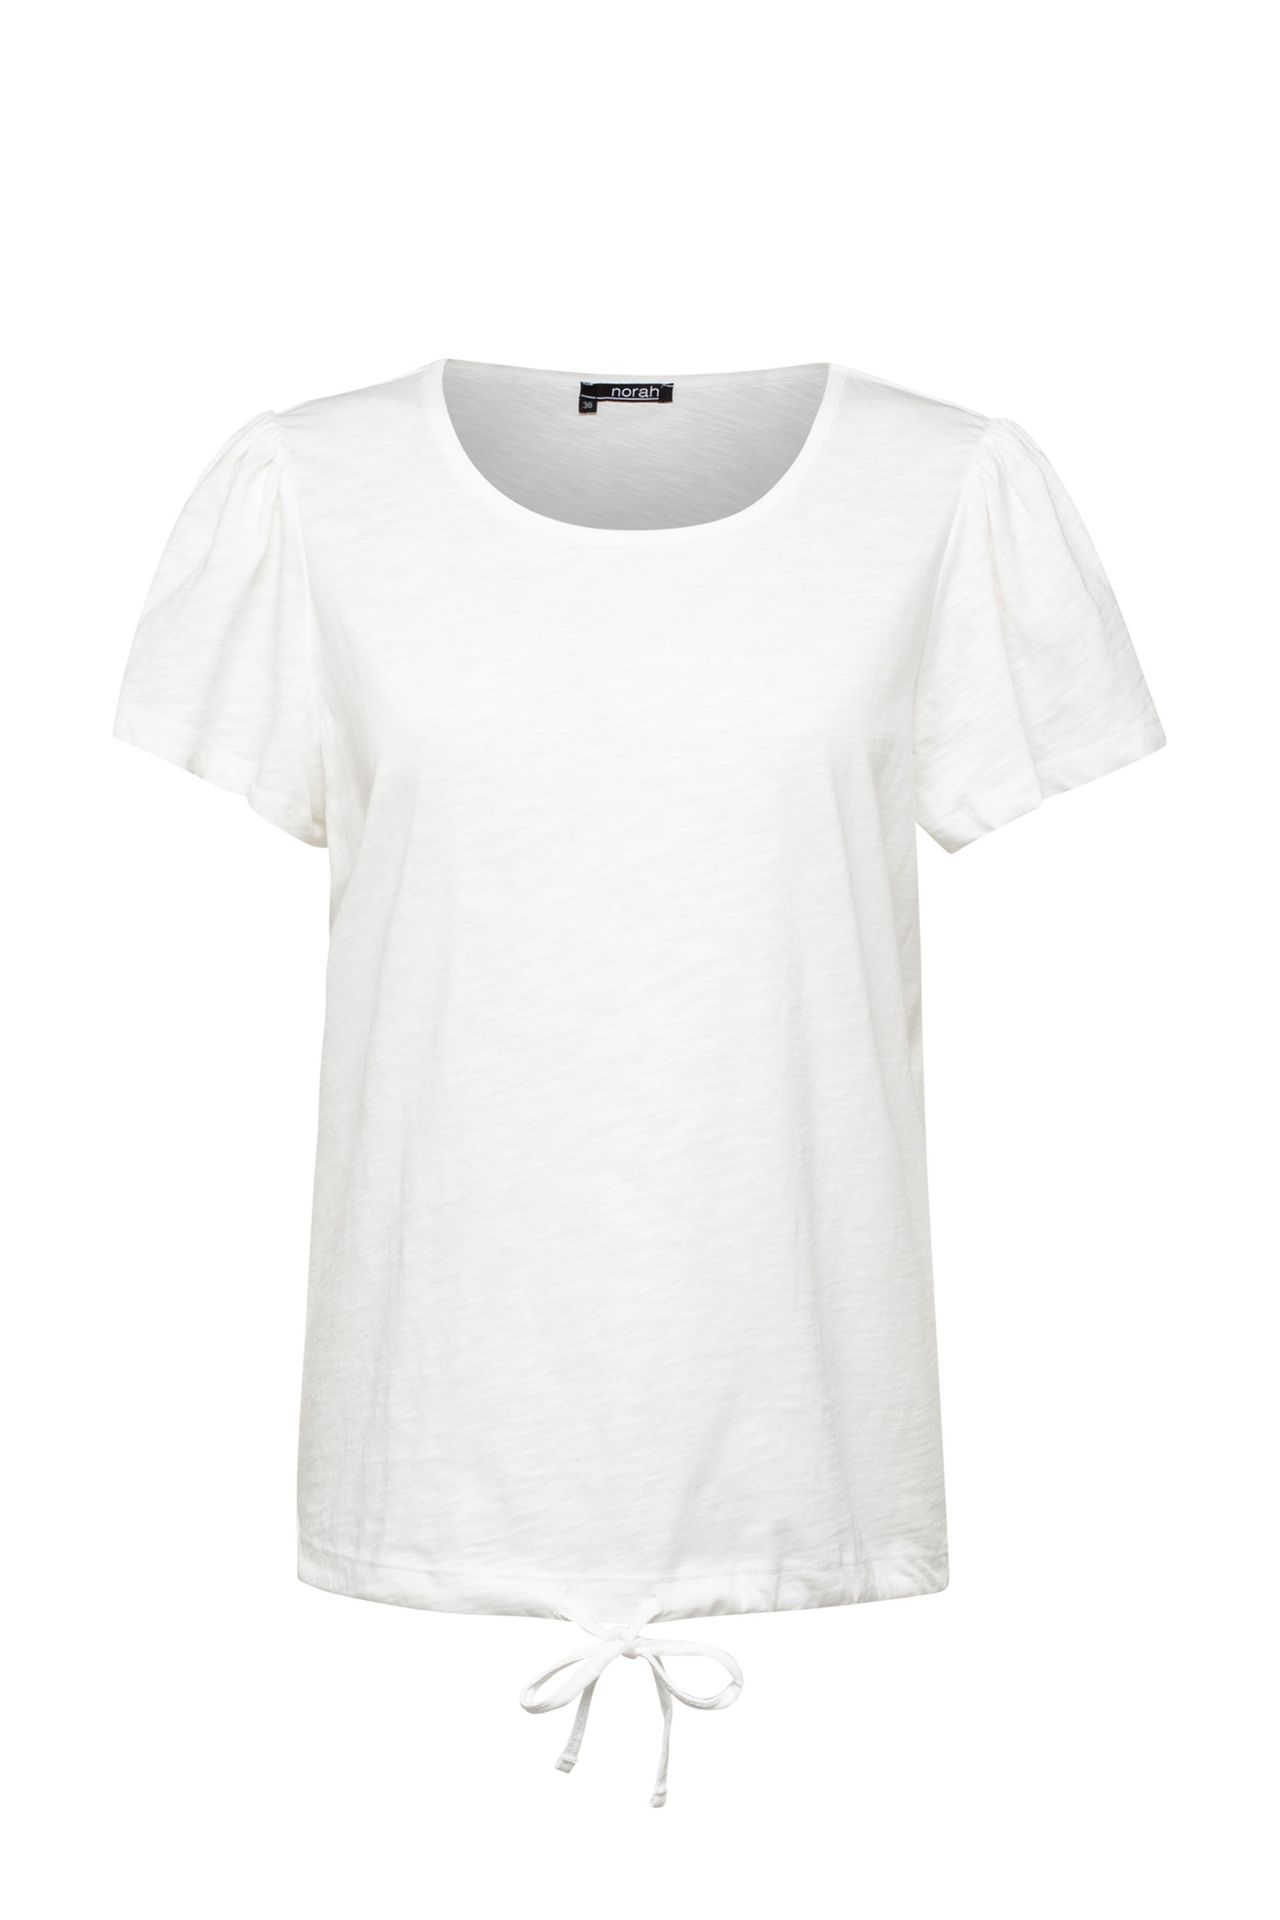 Norah Shirt wit gemêleerd  off-white 212572-101